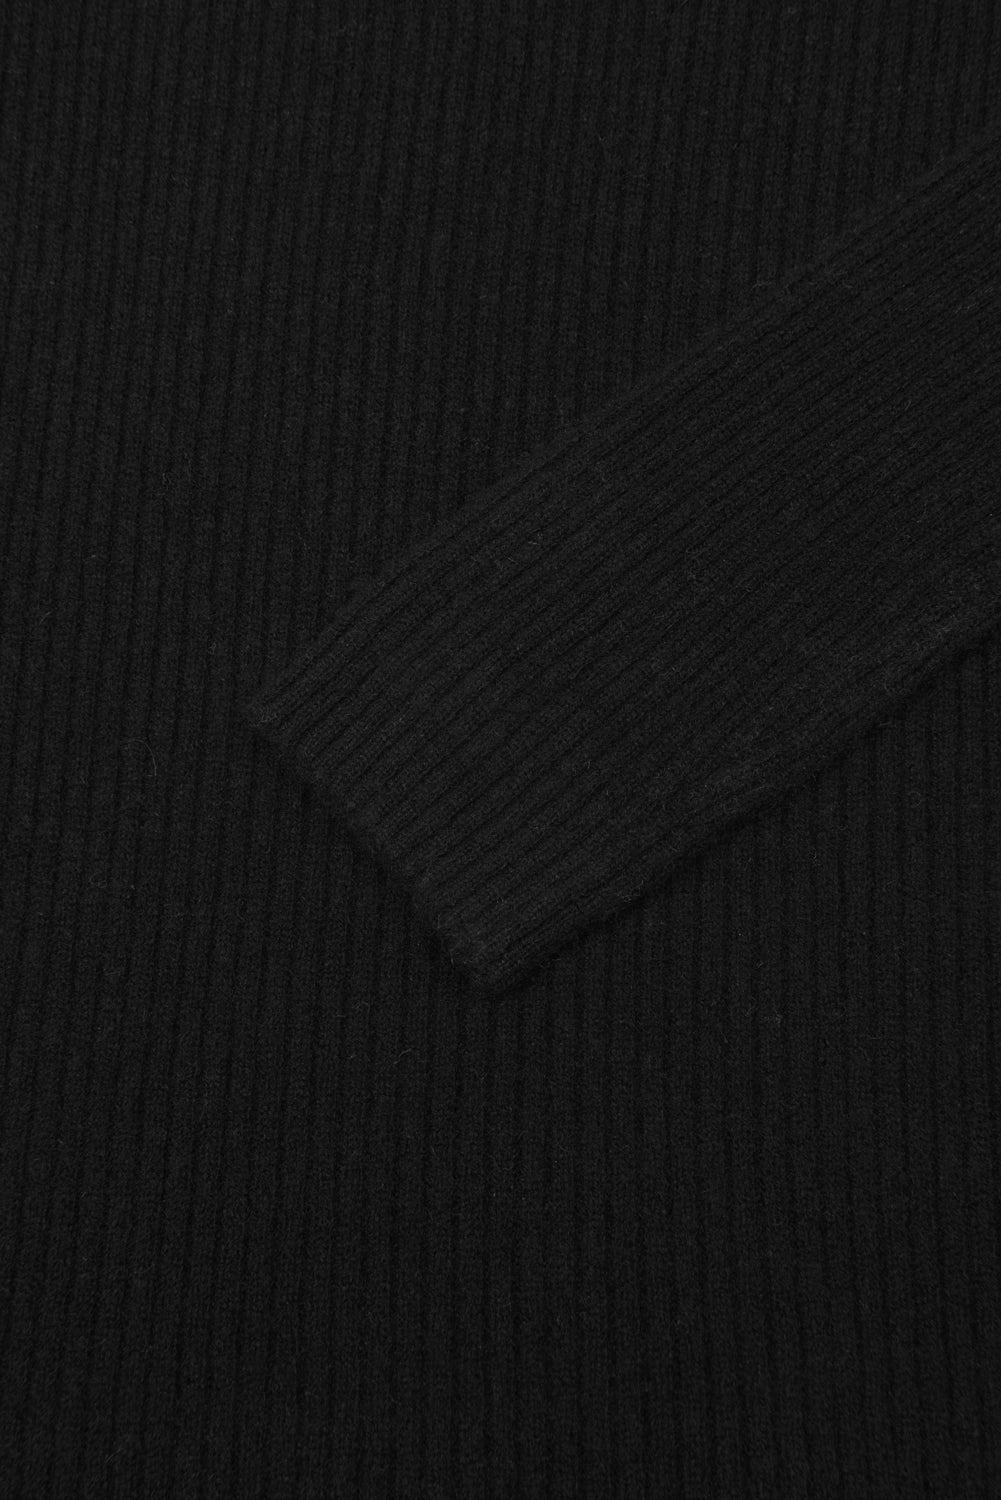 Merino Knitted Dress (Black)